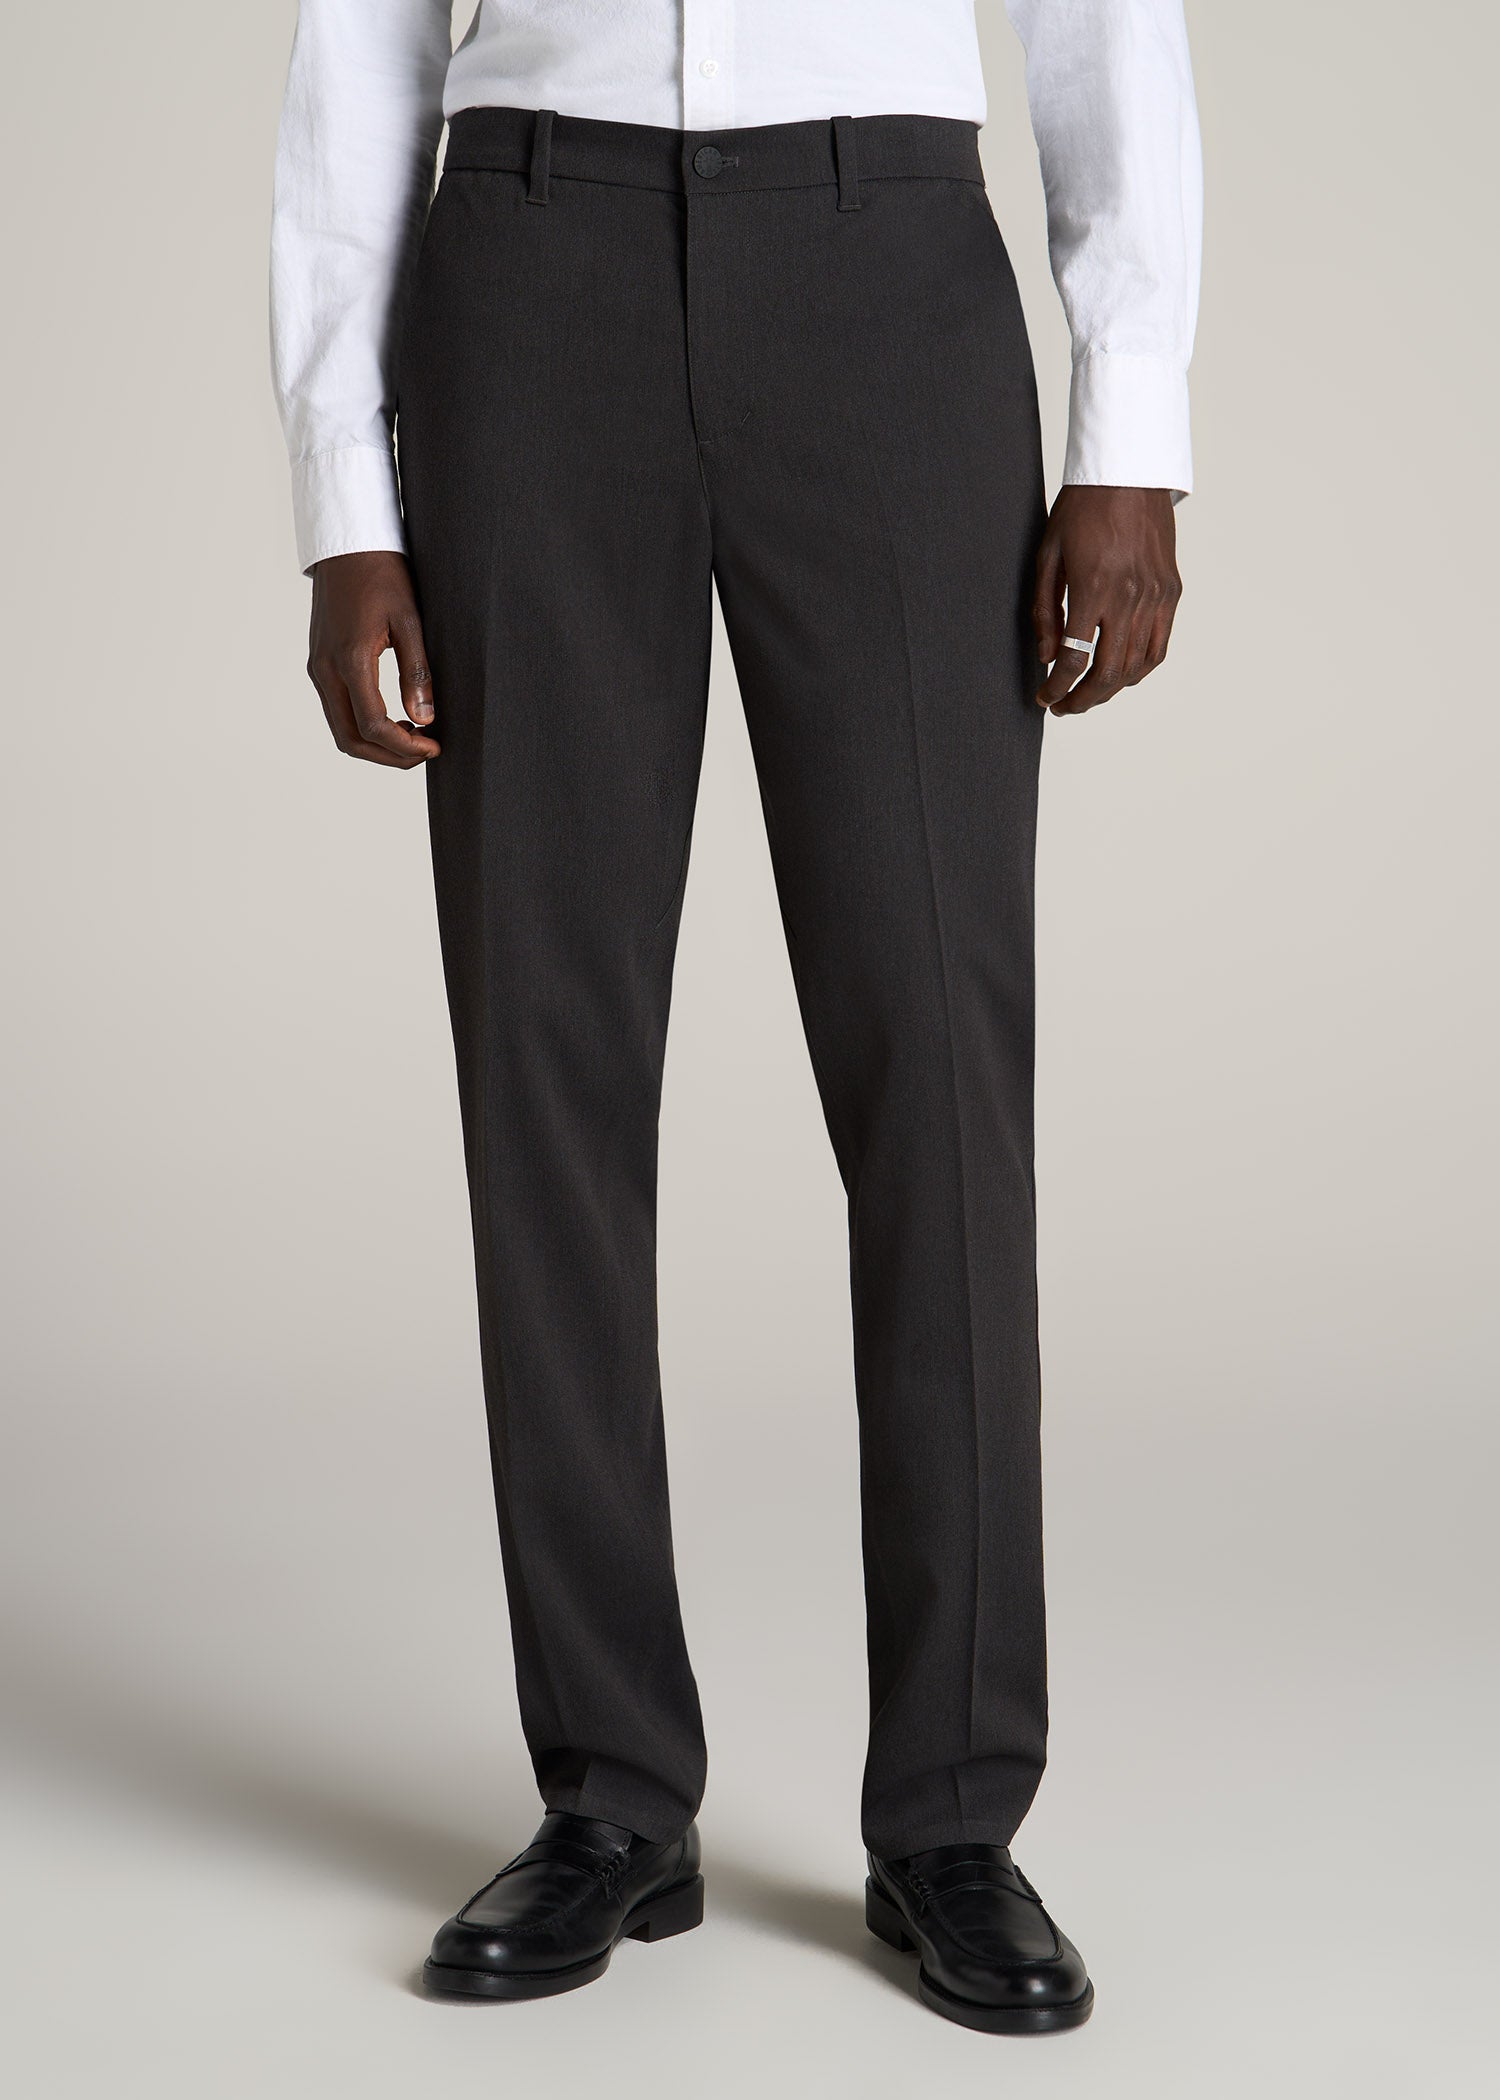 Stretch Dress Pants for Tall Men | American Tall